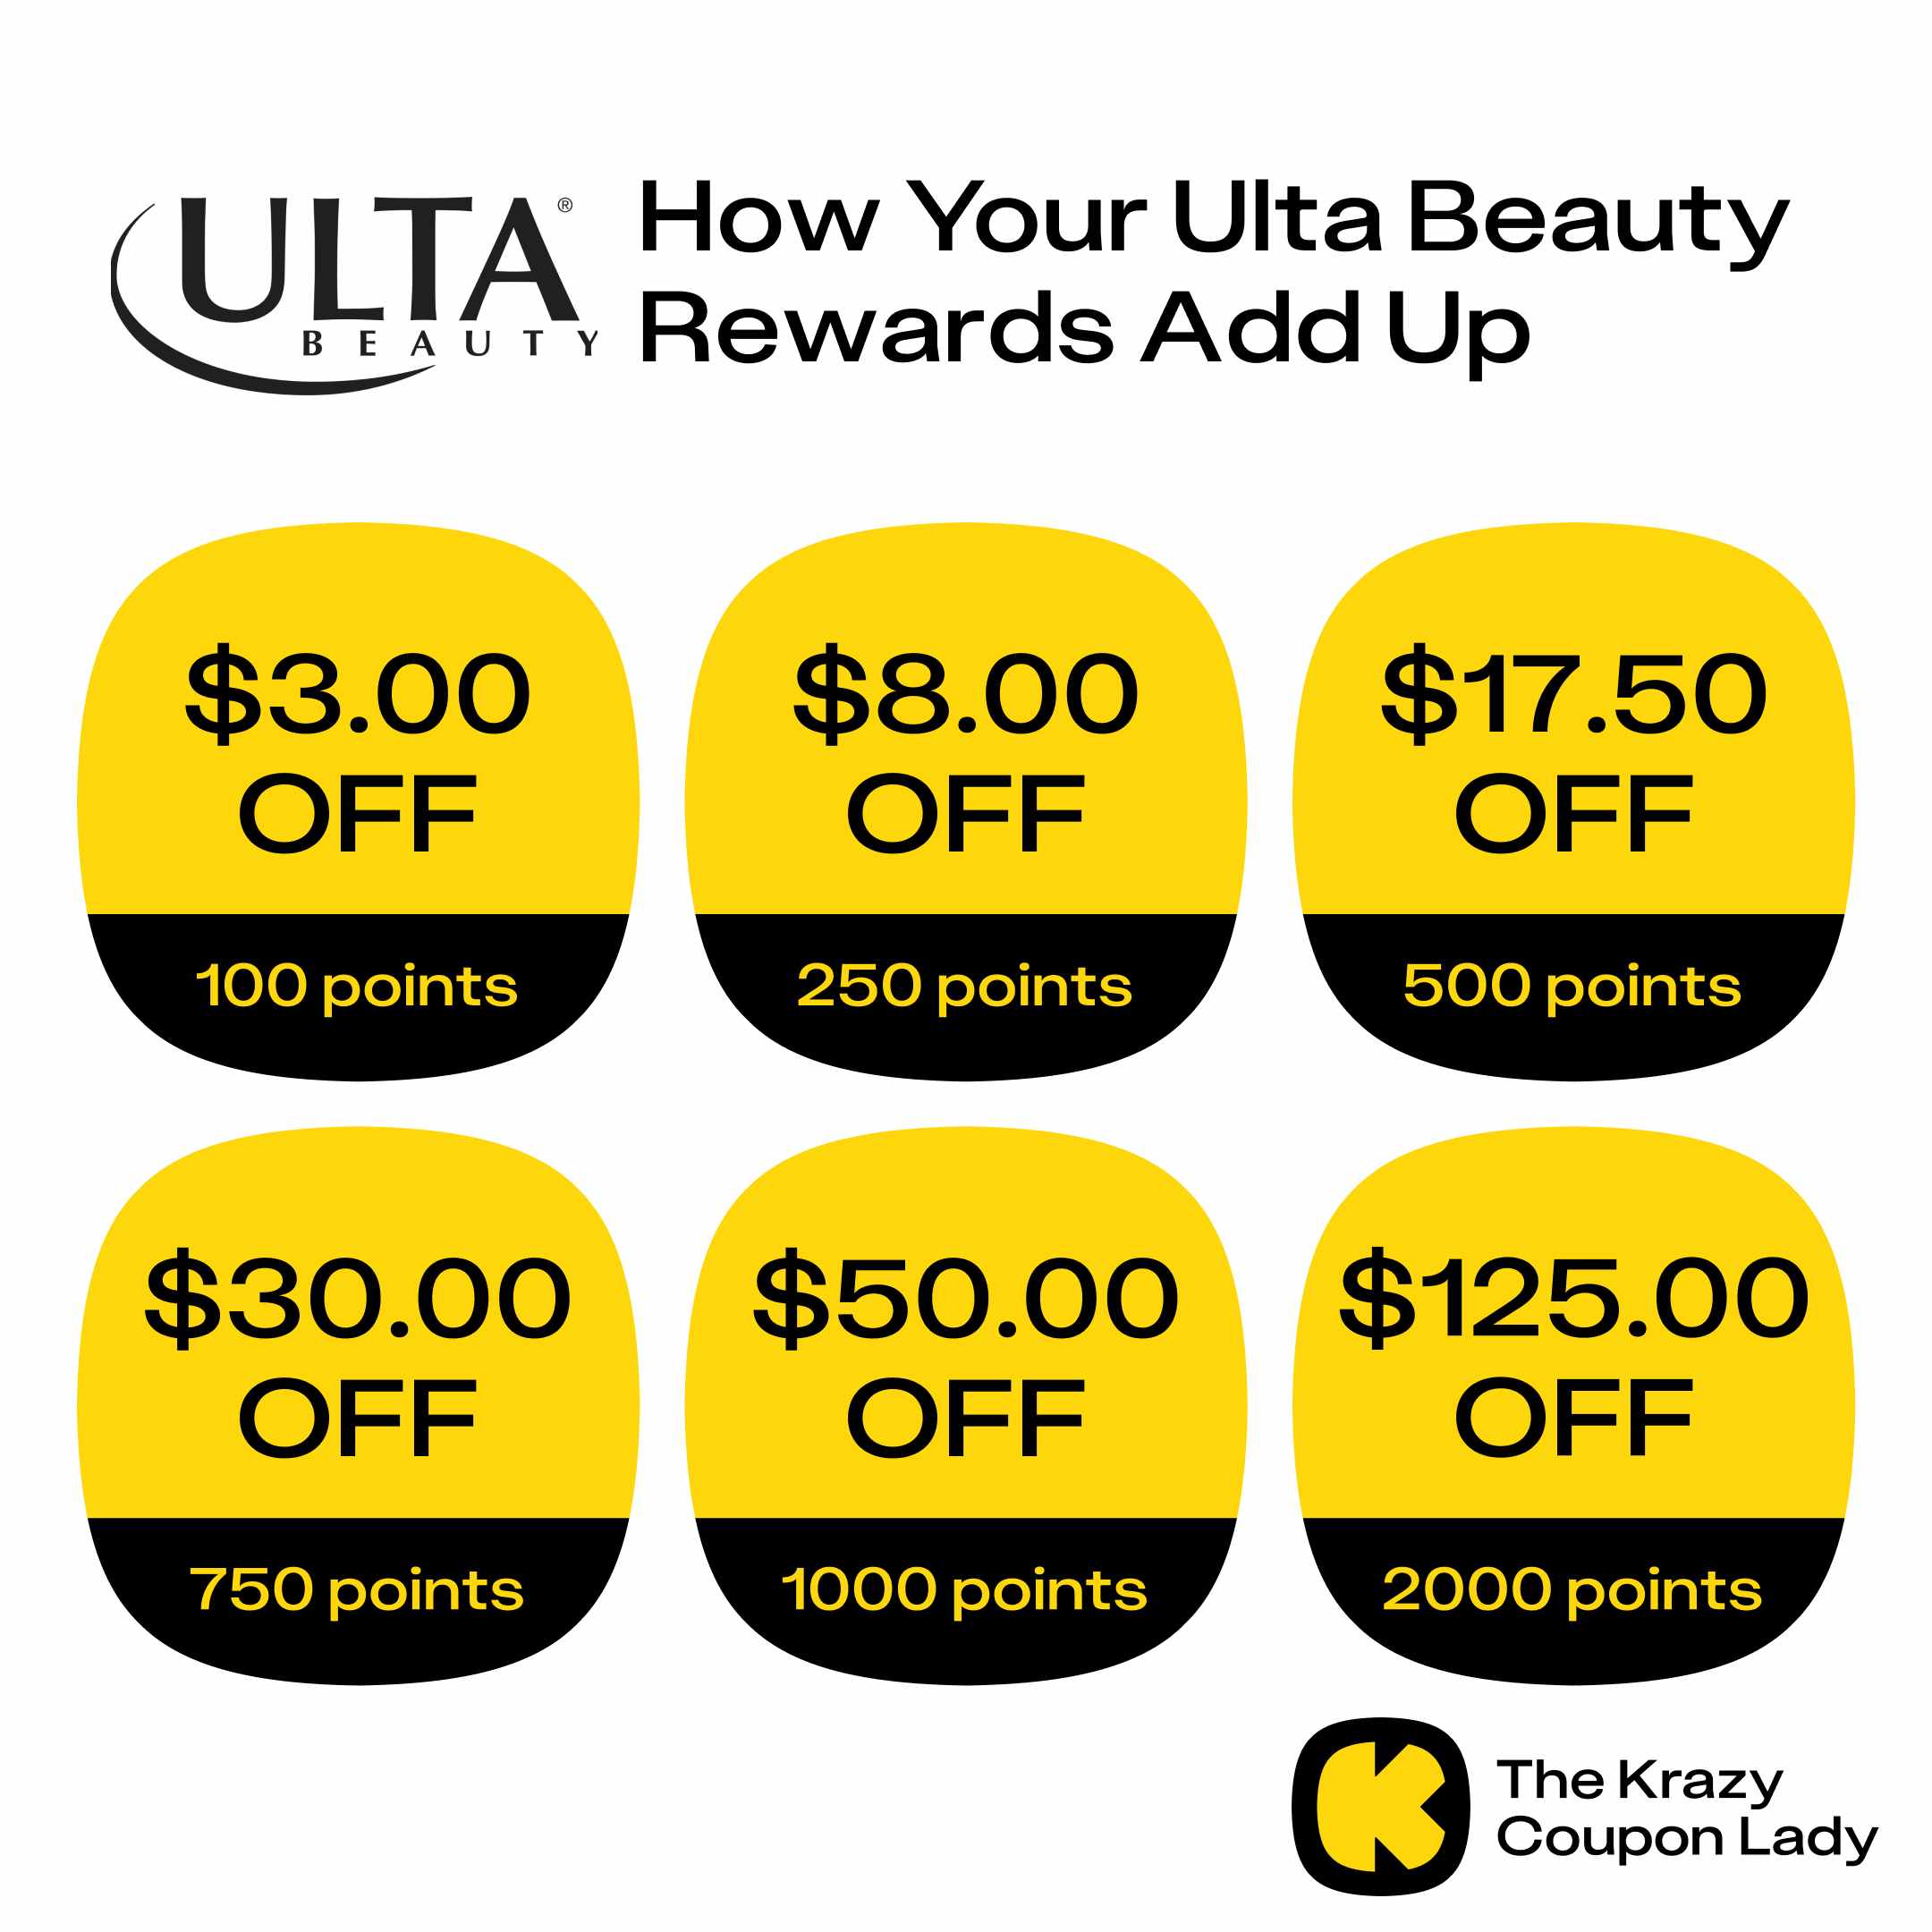 How Your Ulta Beauty Rewards Add Up